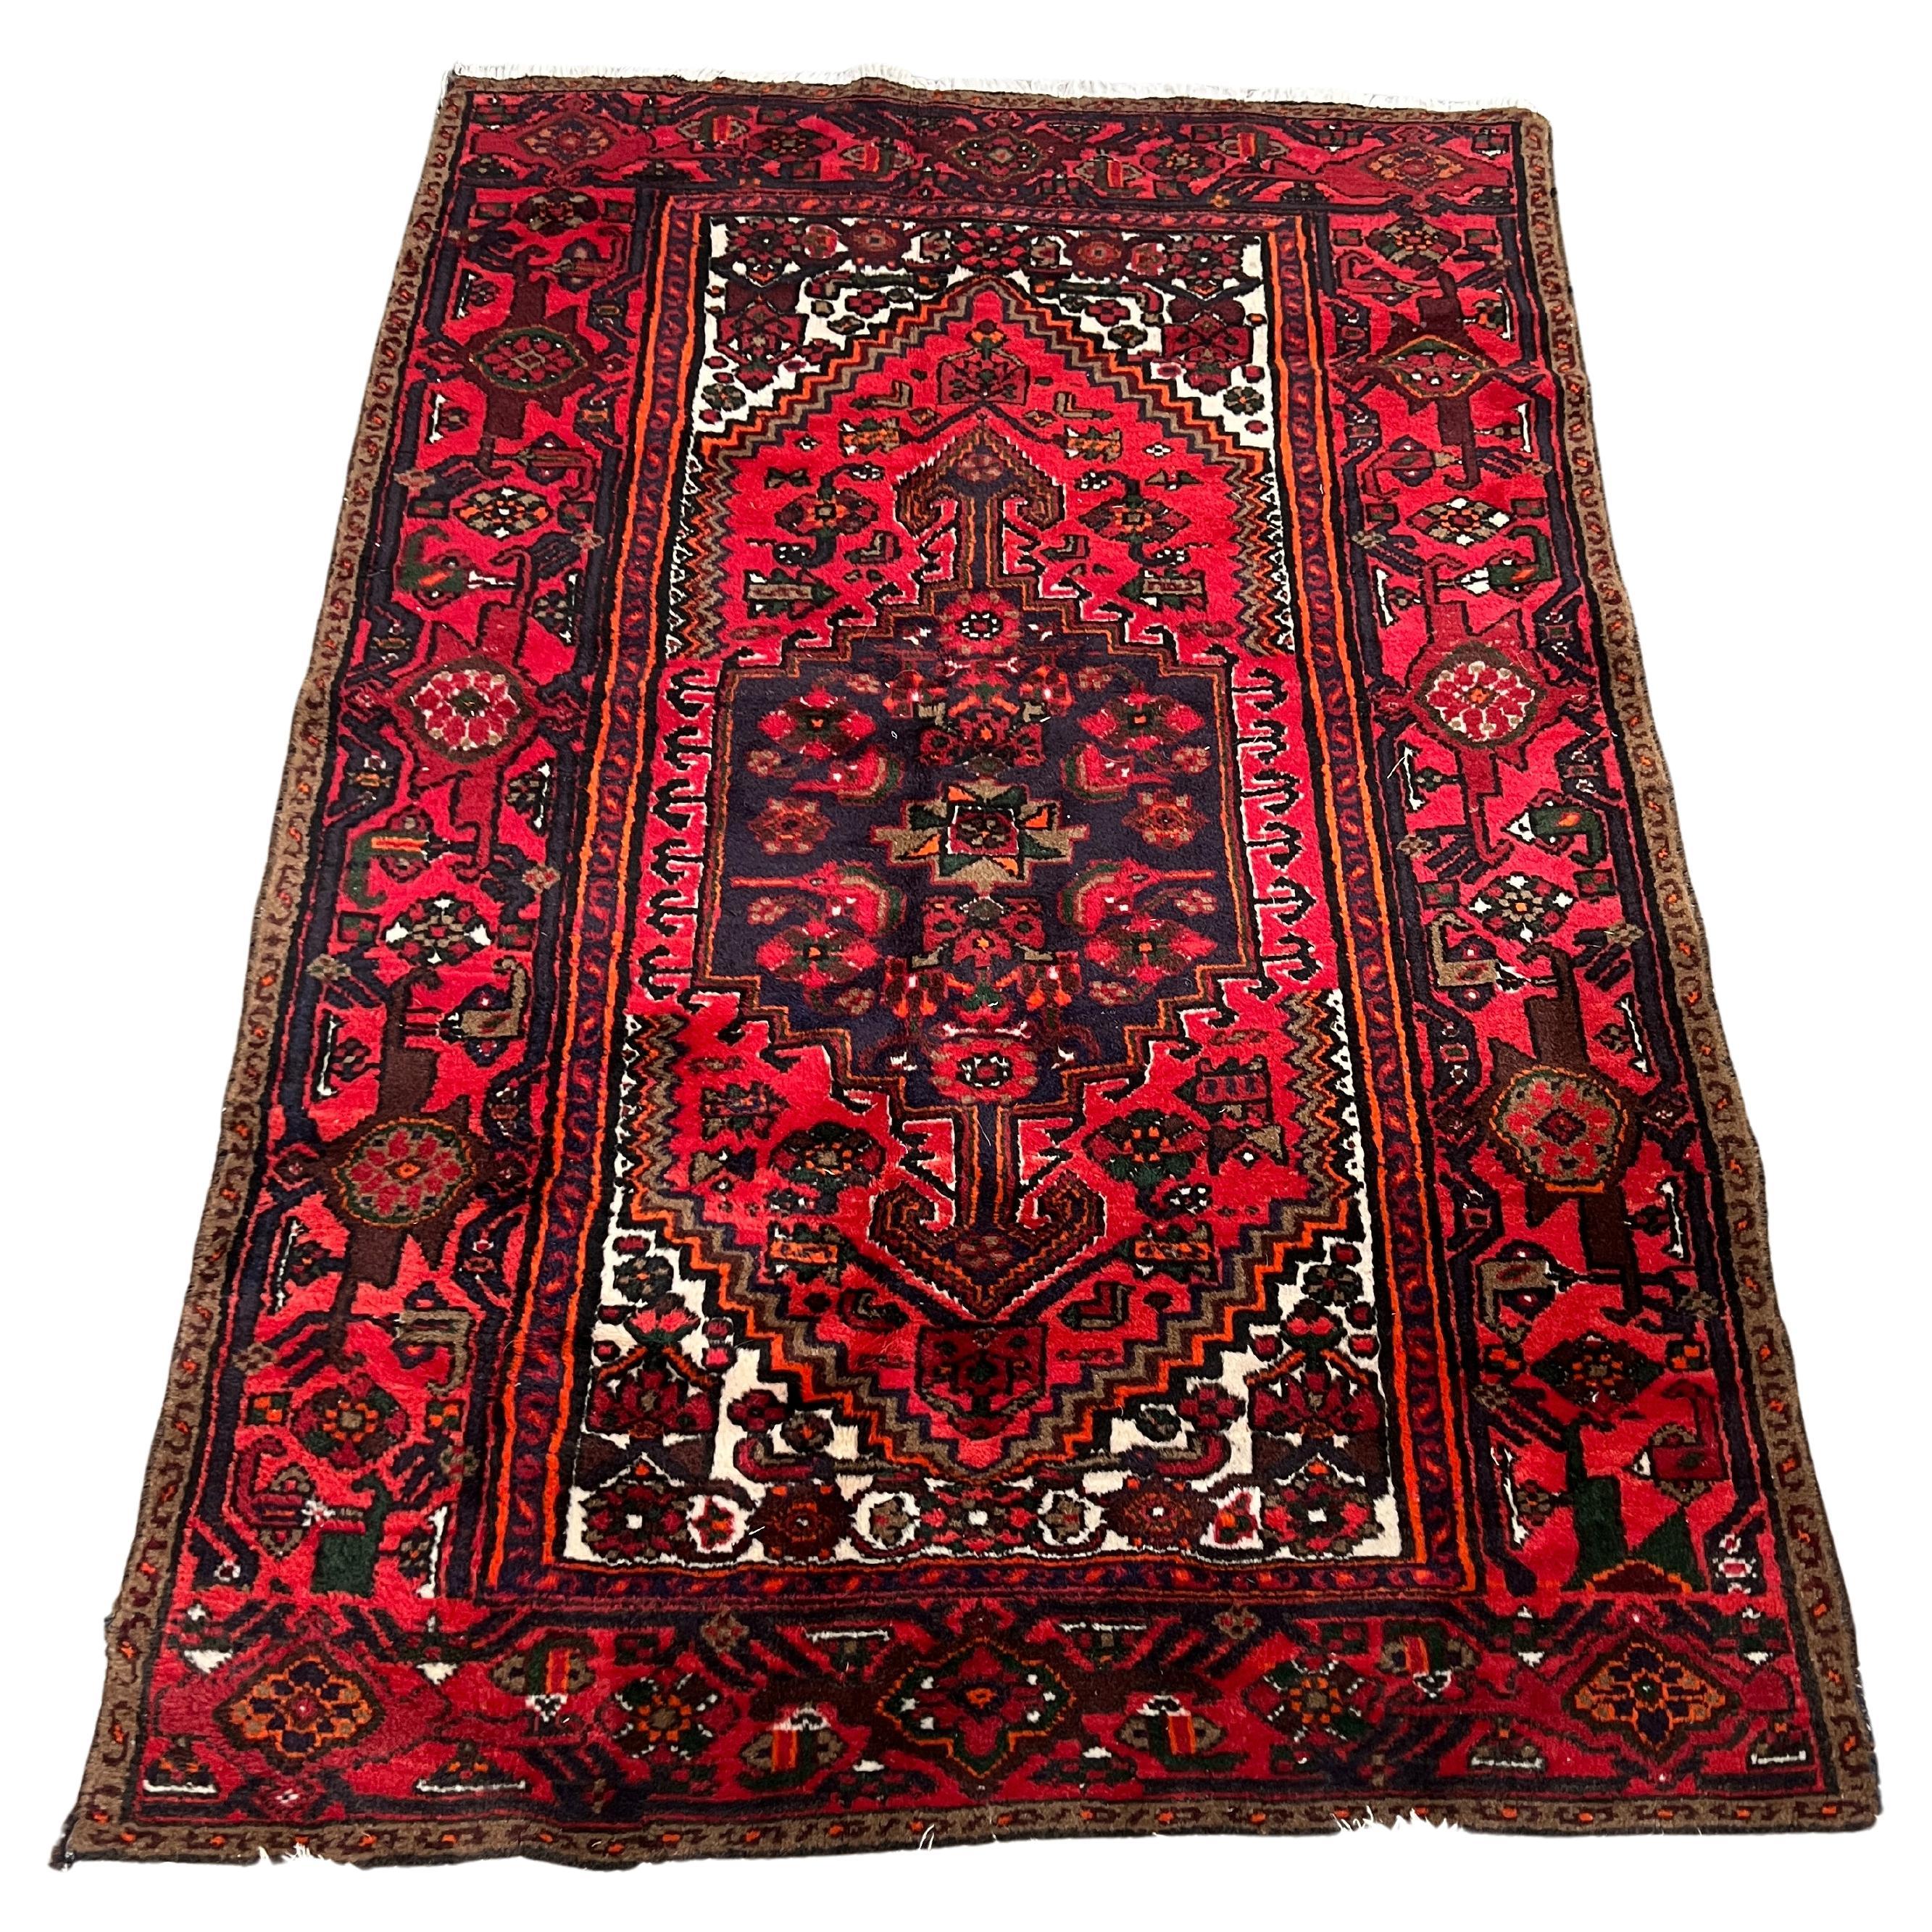 Vintage Persian Hamadan Wool Rug or Carpet 4' x 6'6" For Sale